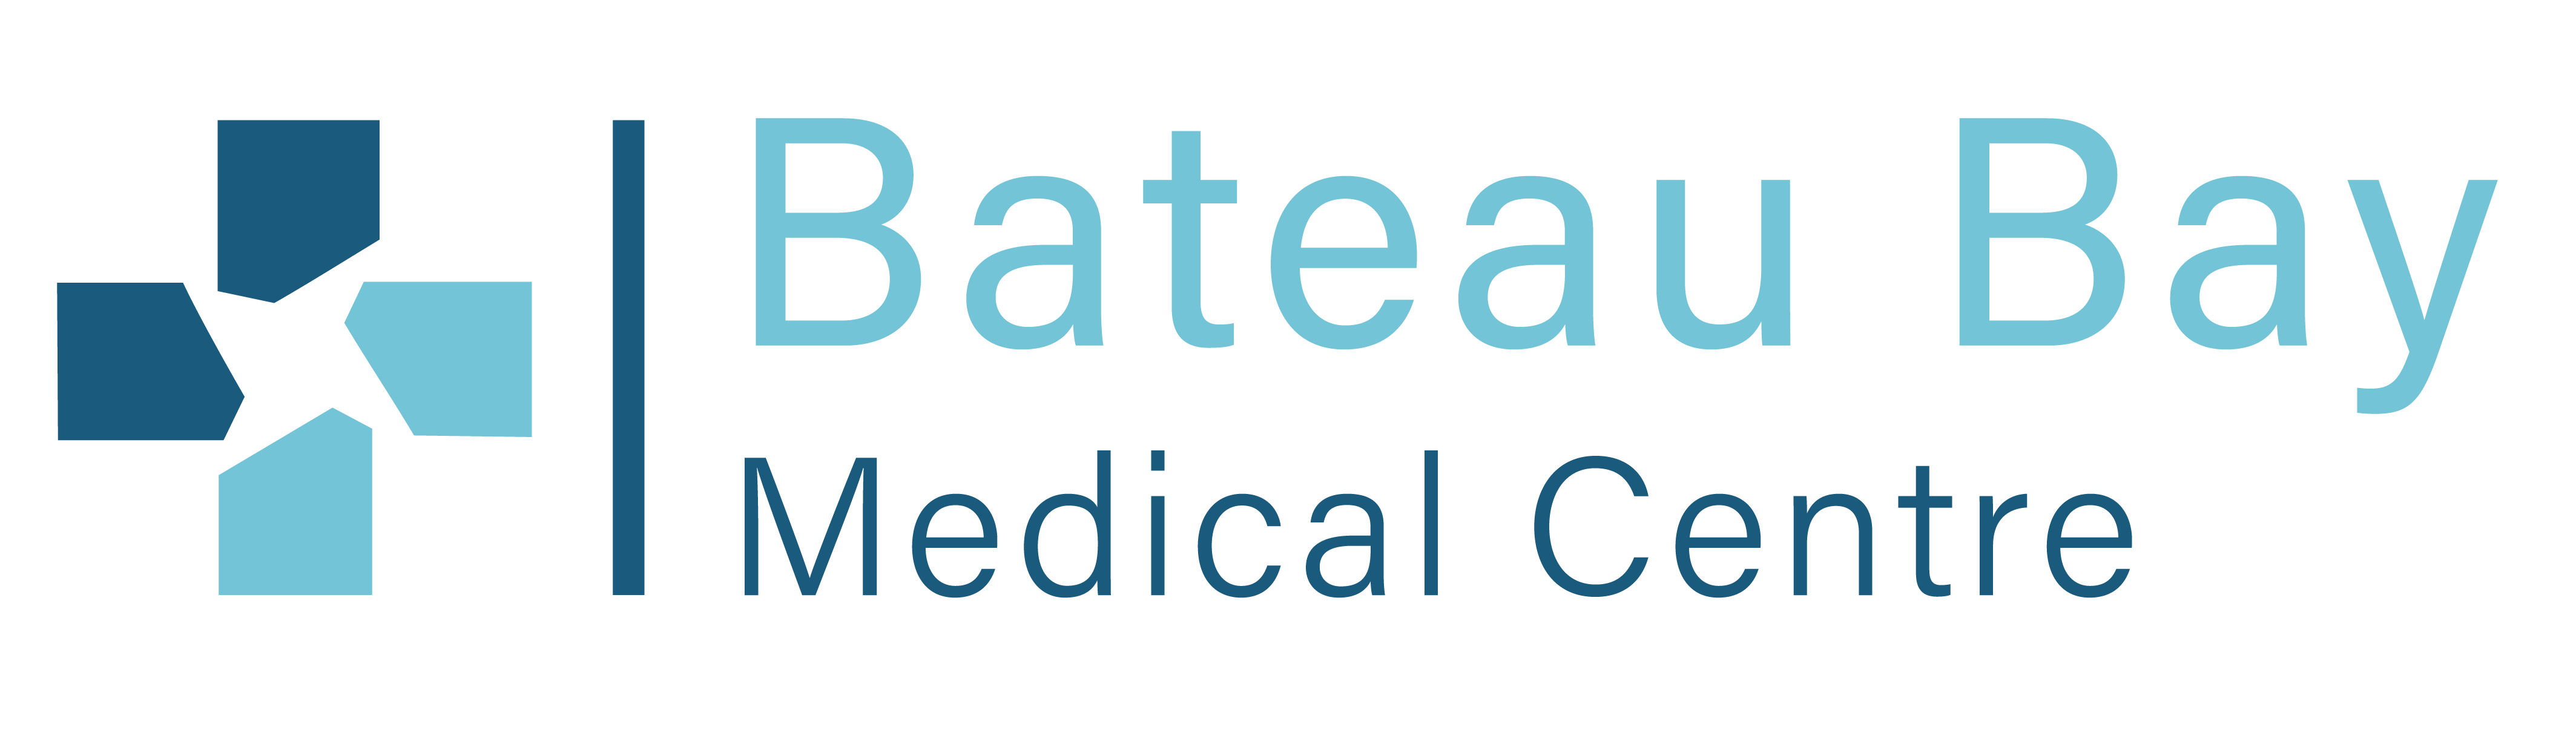 MF Bateau Bay Medical Centre Logo Files Stacked